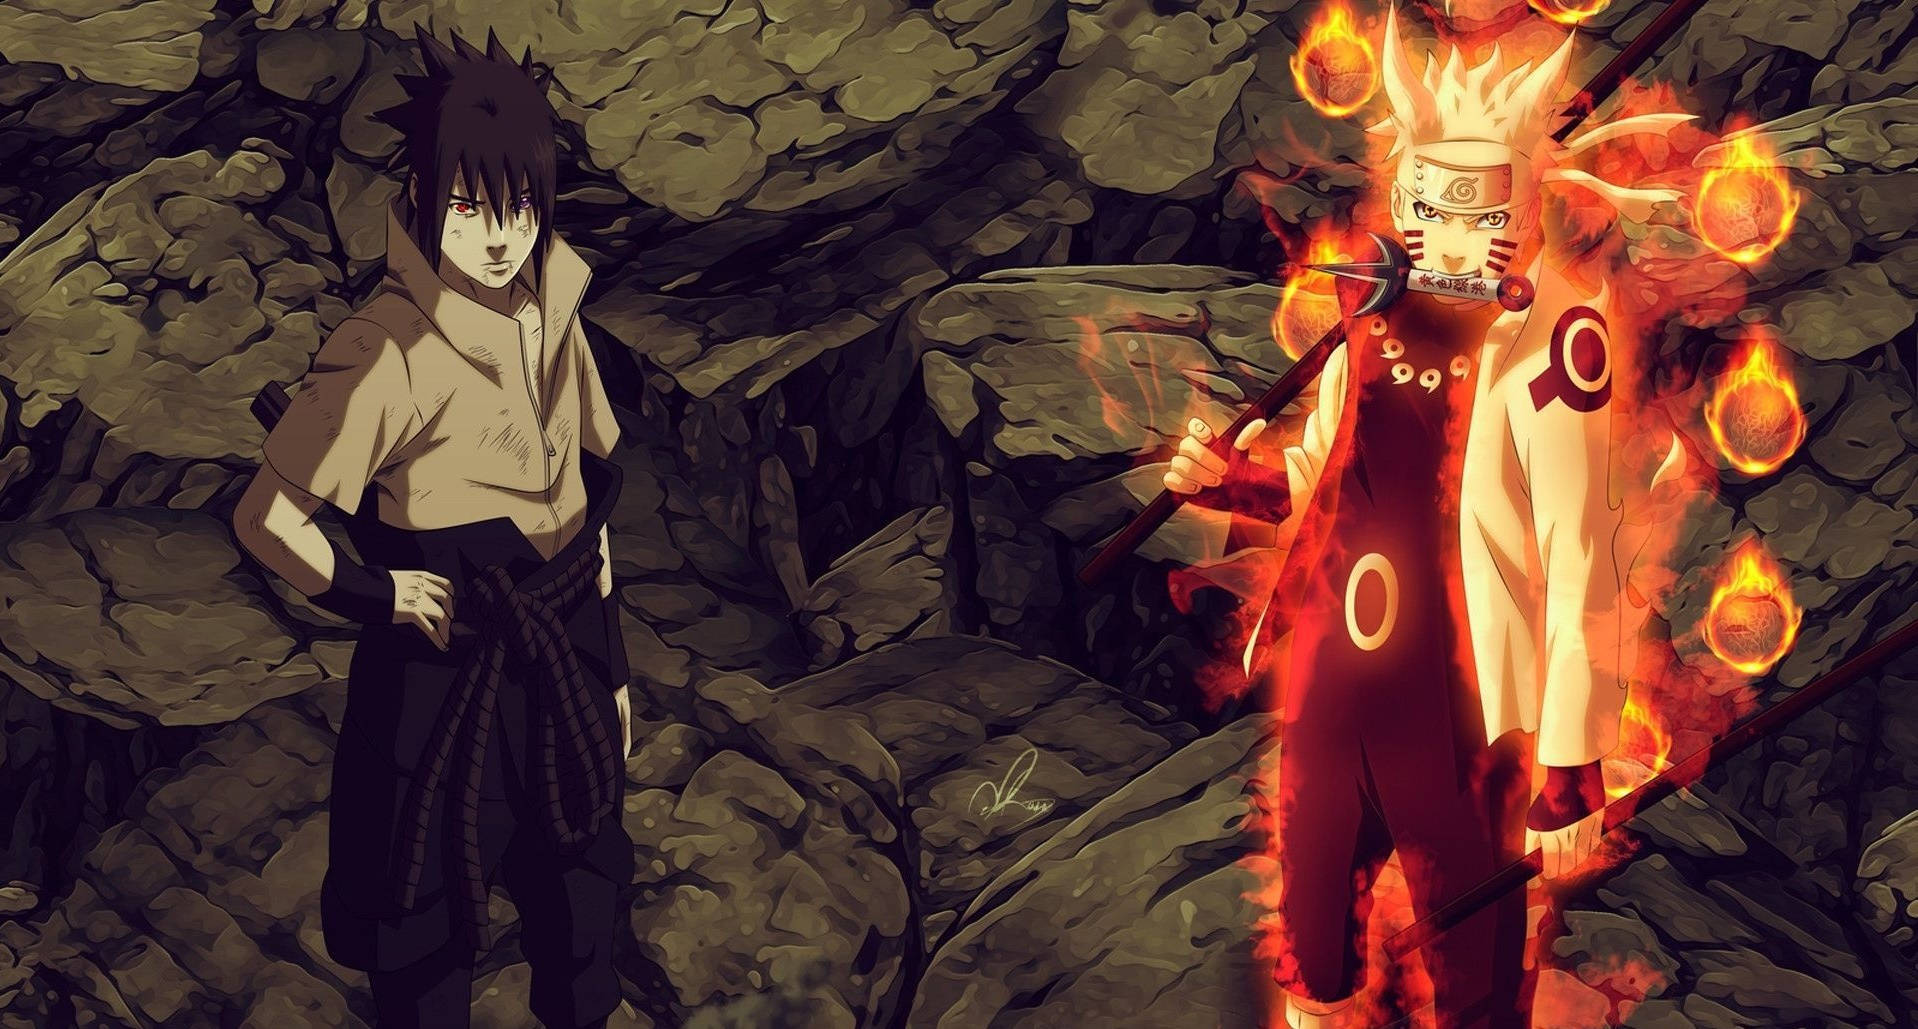 Anime Naruto Fighting Together With Sasuke Uchiha Wallpaper